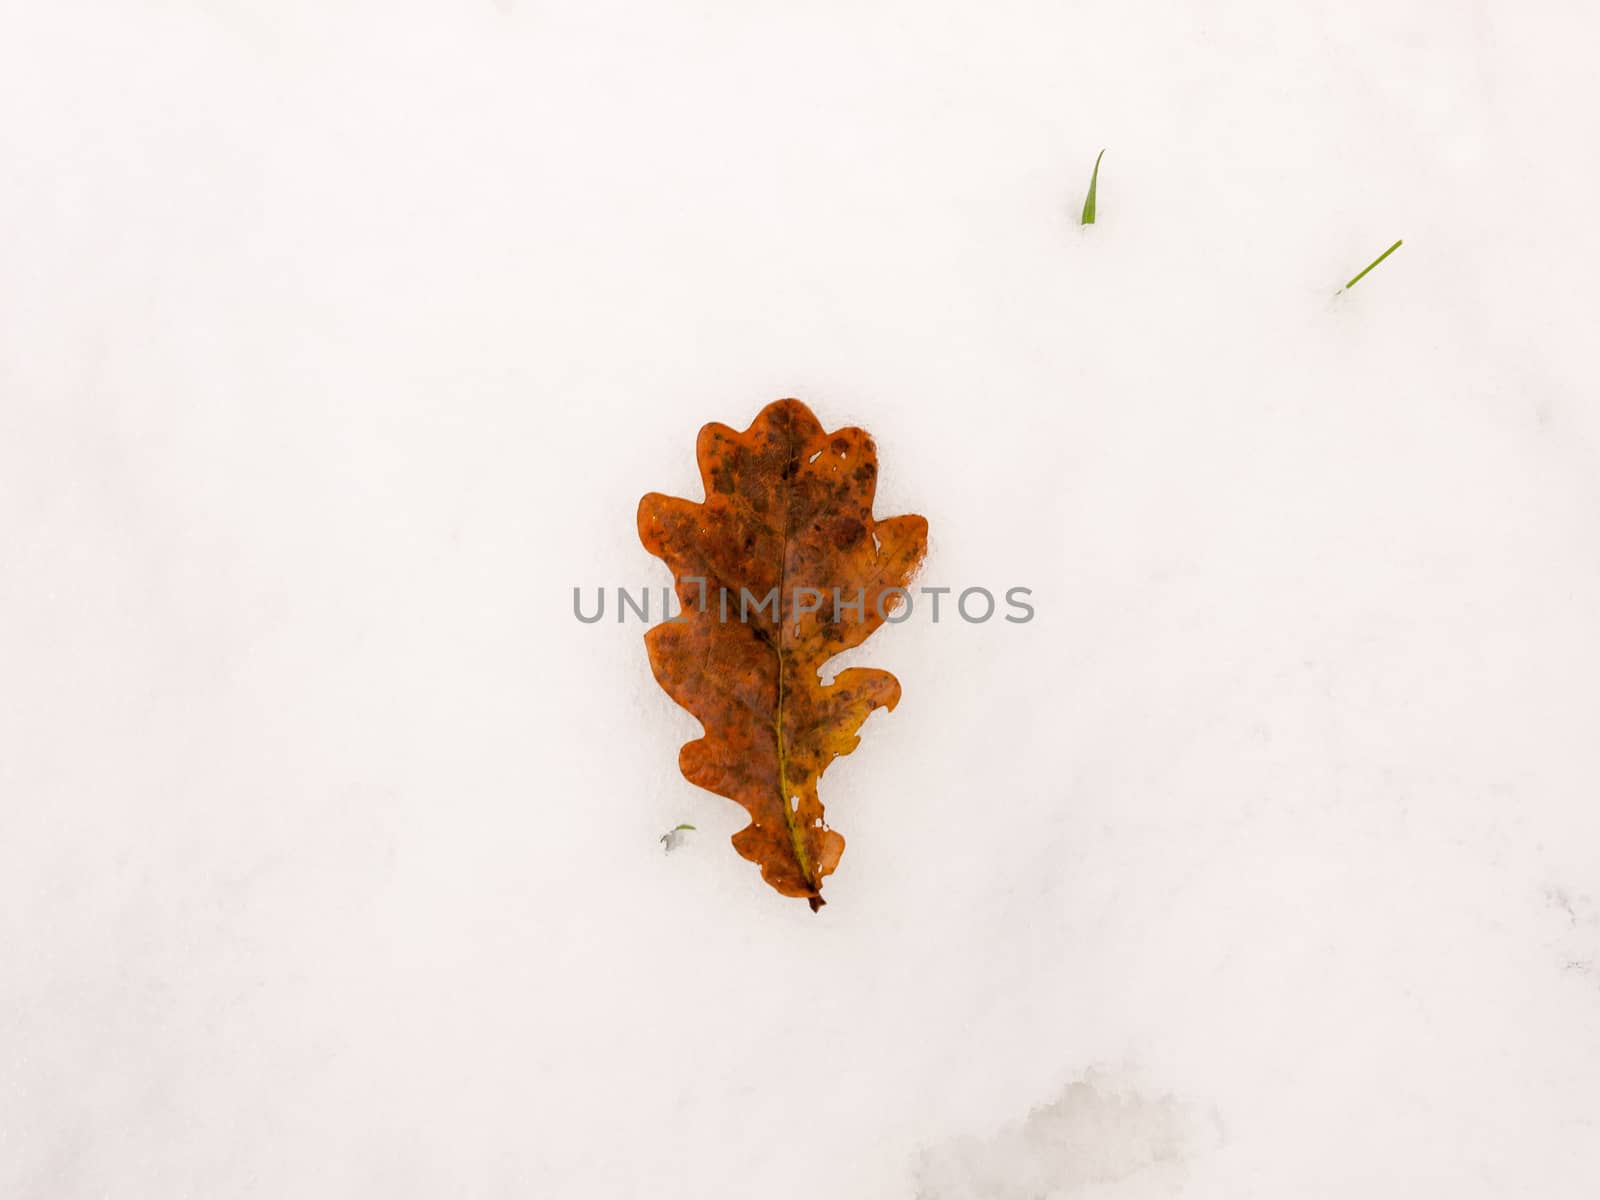 single brown close up fallen oak leaf whole on white snow background floor nature; essex; england; uk